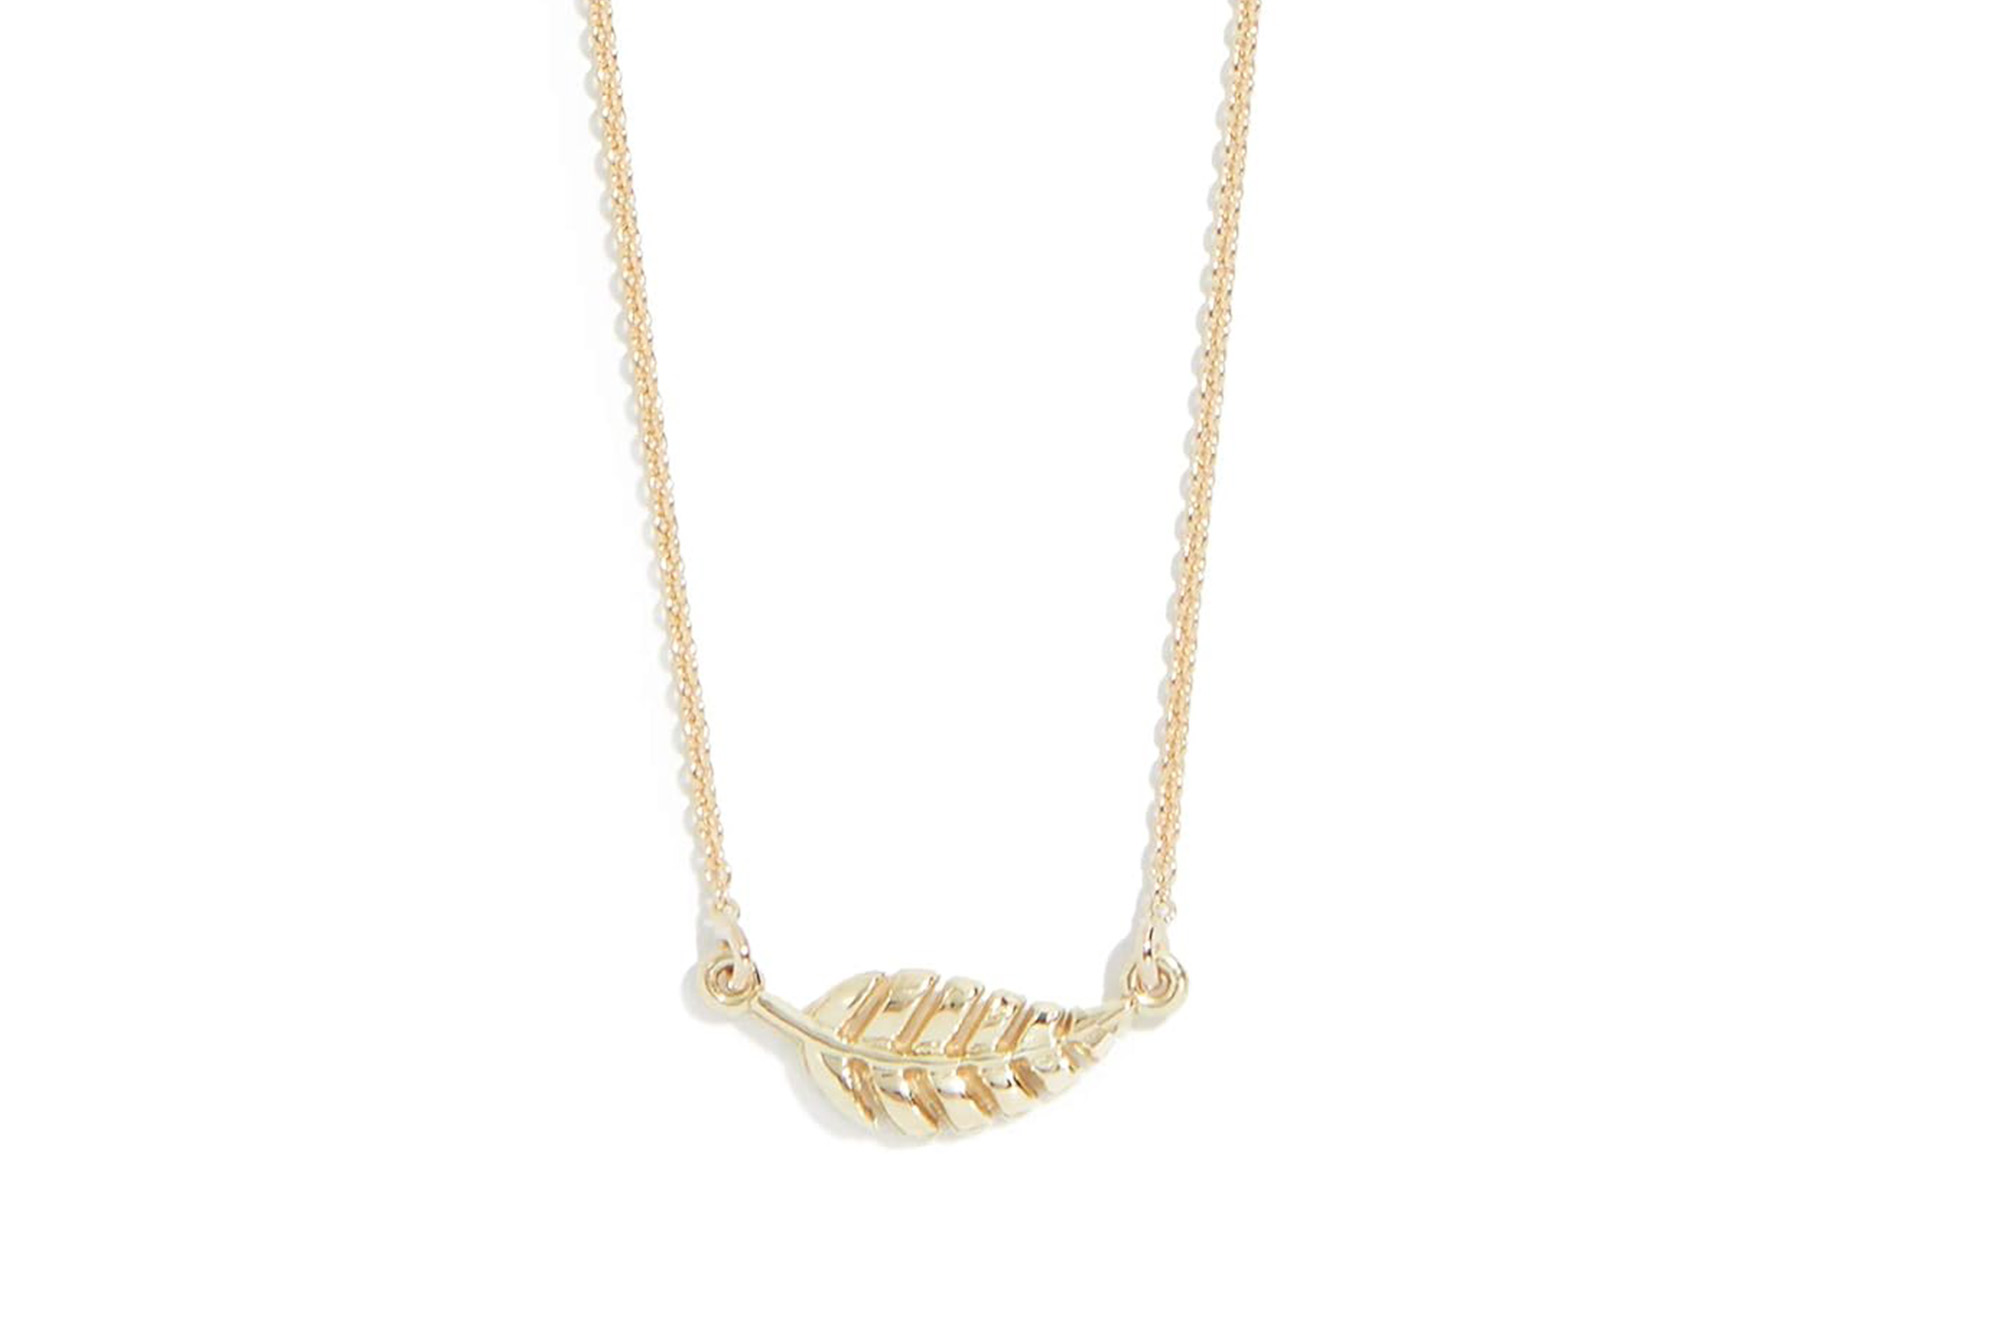 A gold leaf necklace